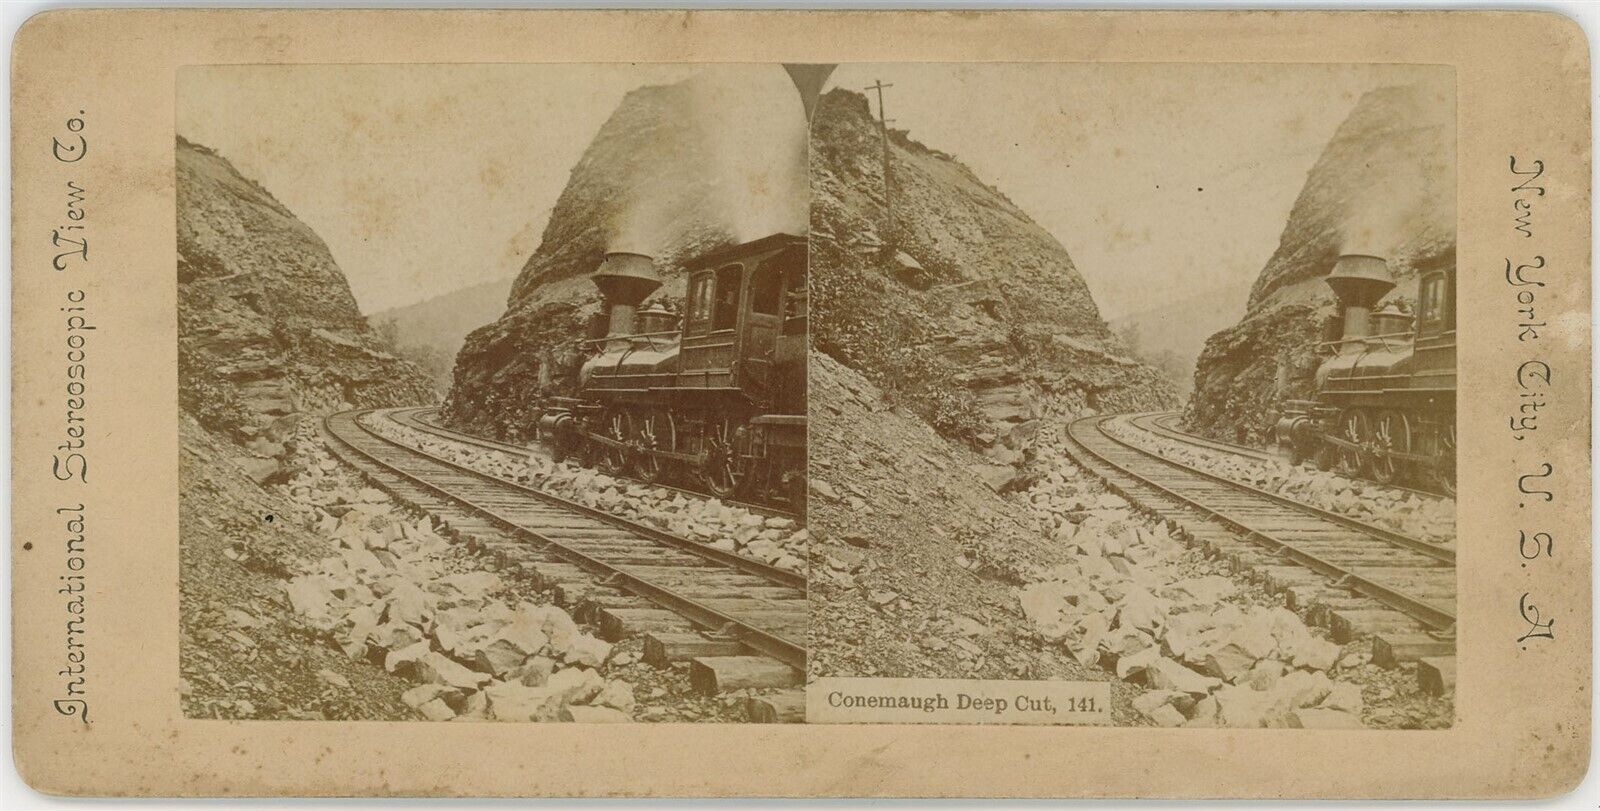 PENNSYLVANIA SV - Conemaugh Deep Cut Train Locomotive 1890s